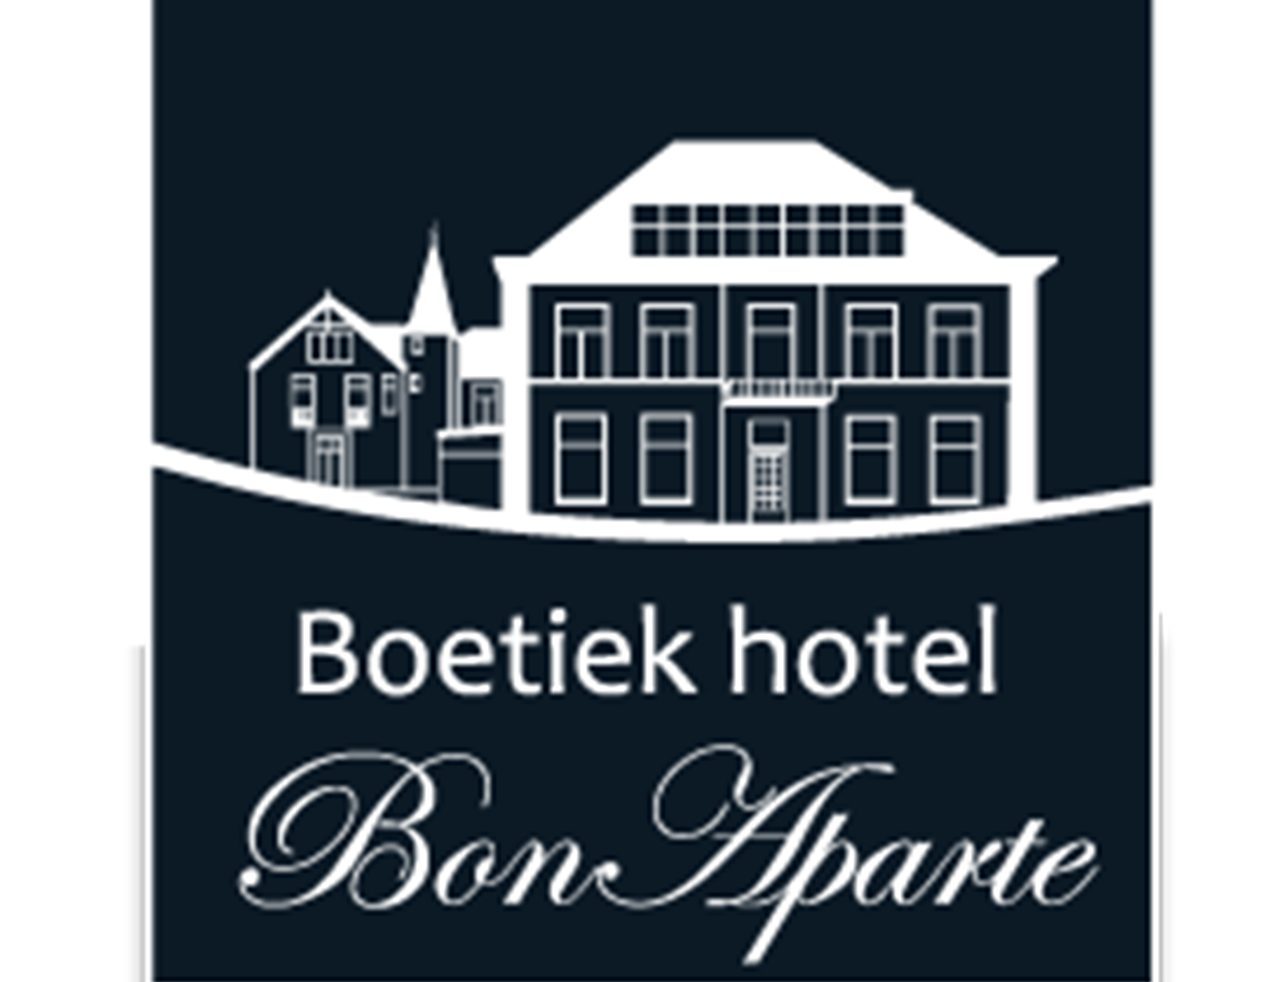 Boetiek Hotel Bon Aparte is horecapartner van Ultimate Adventures